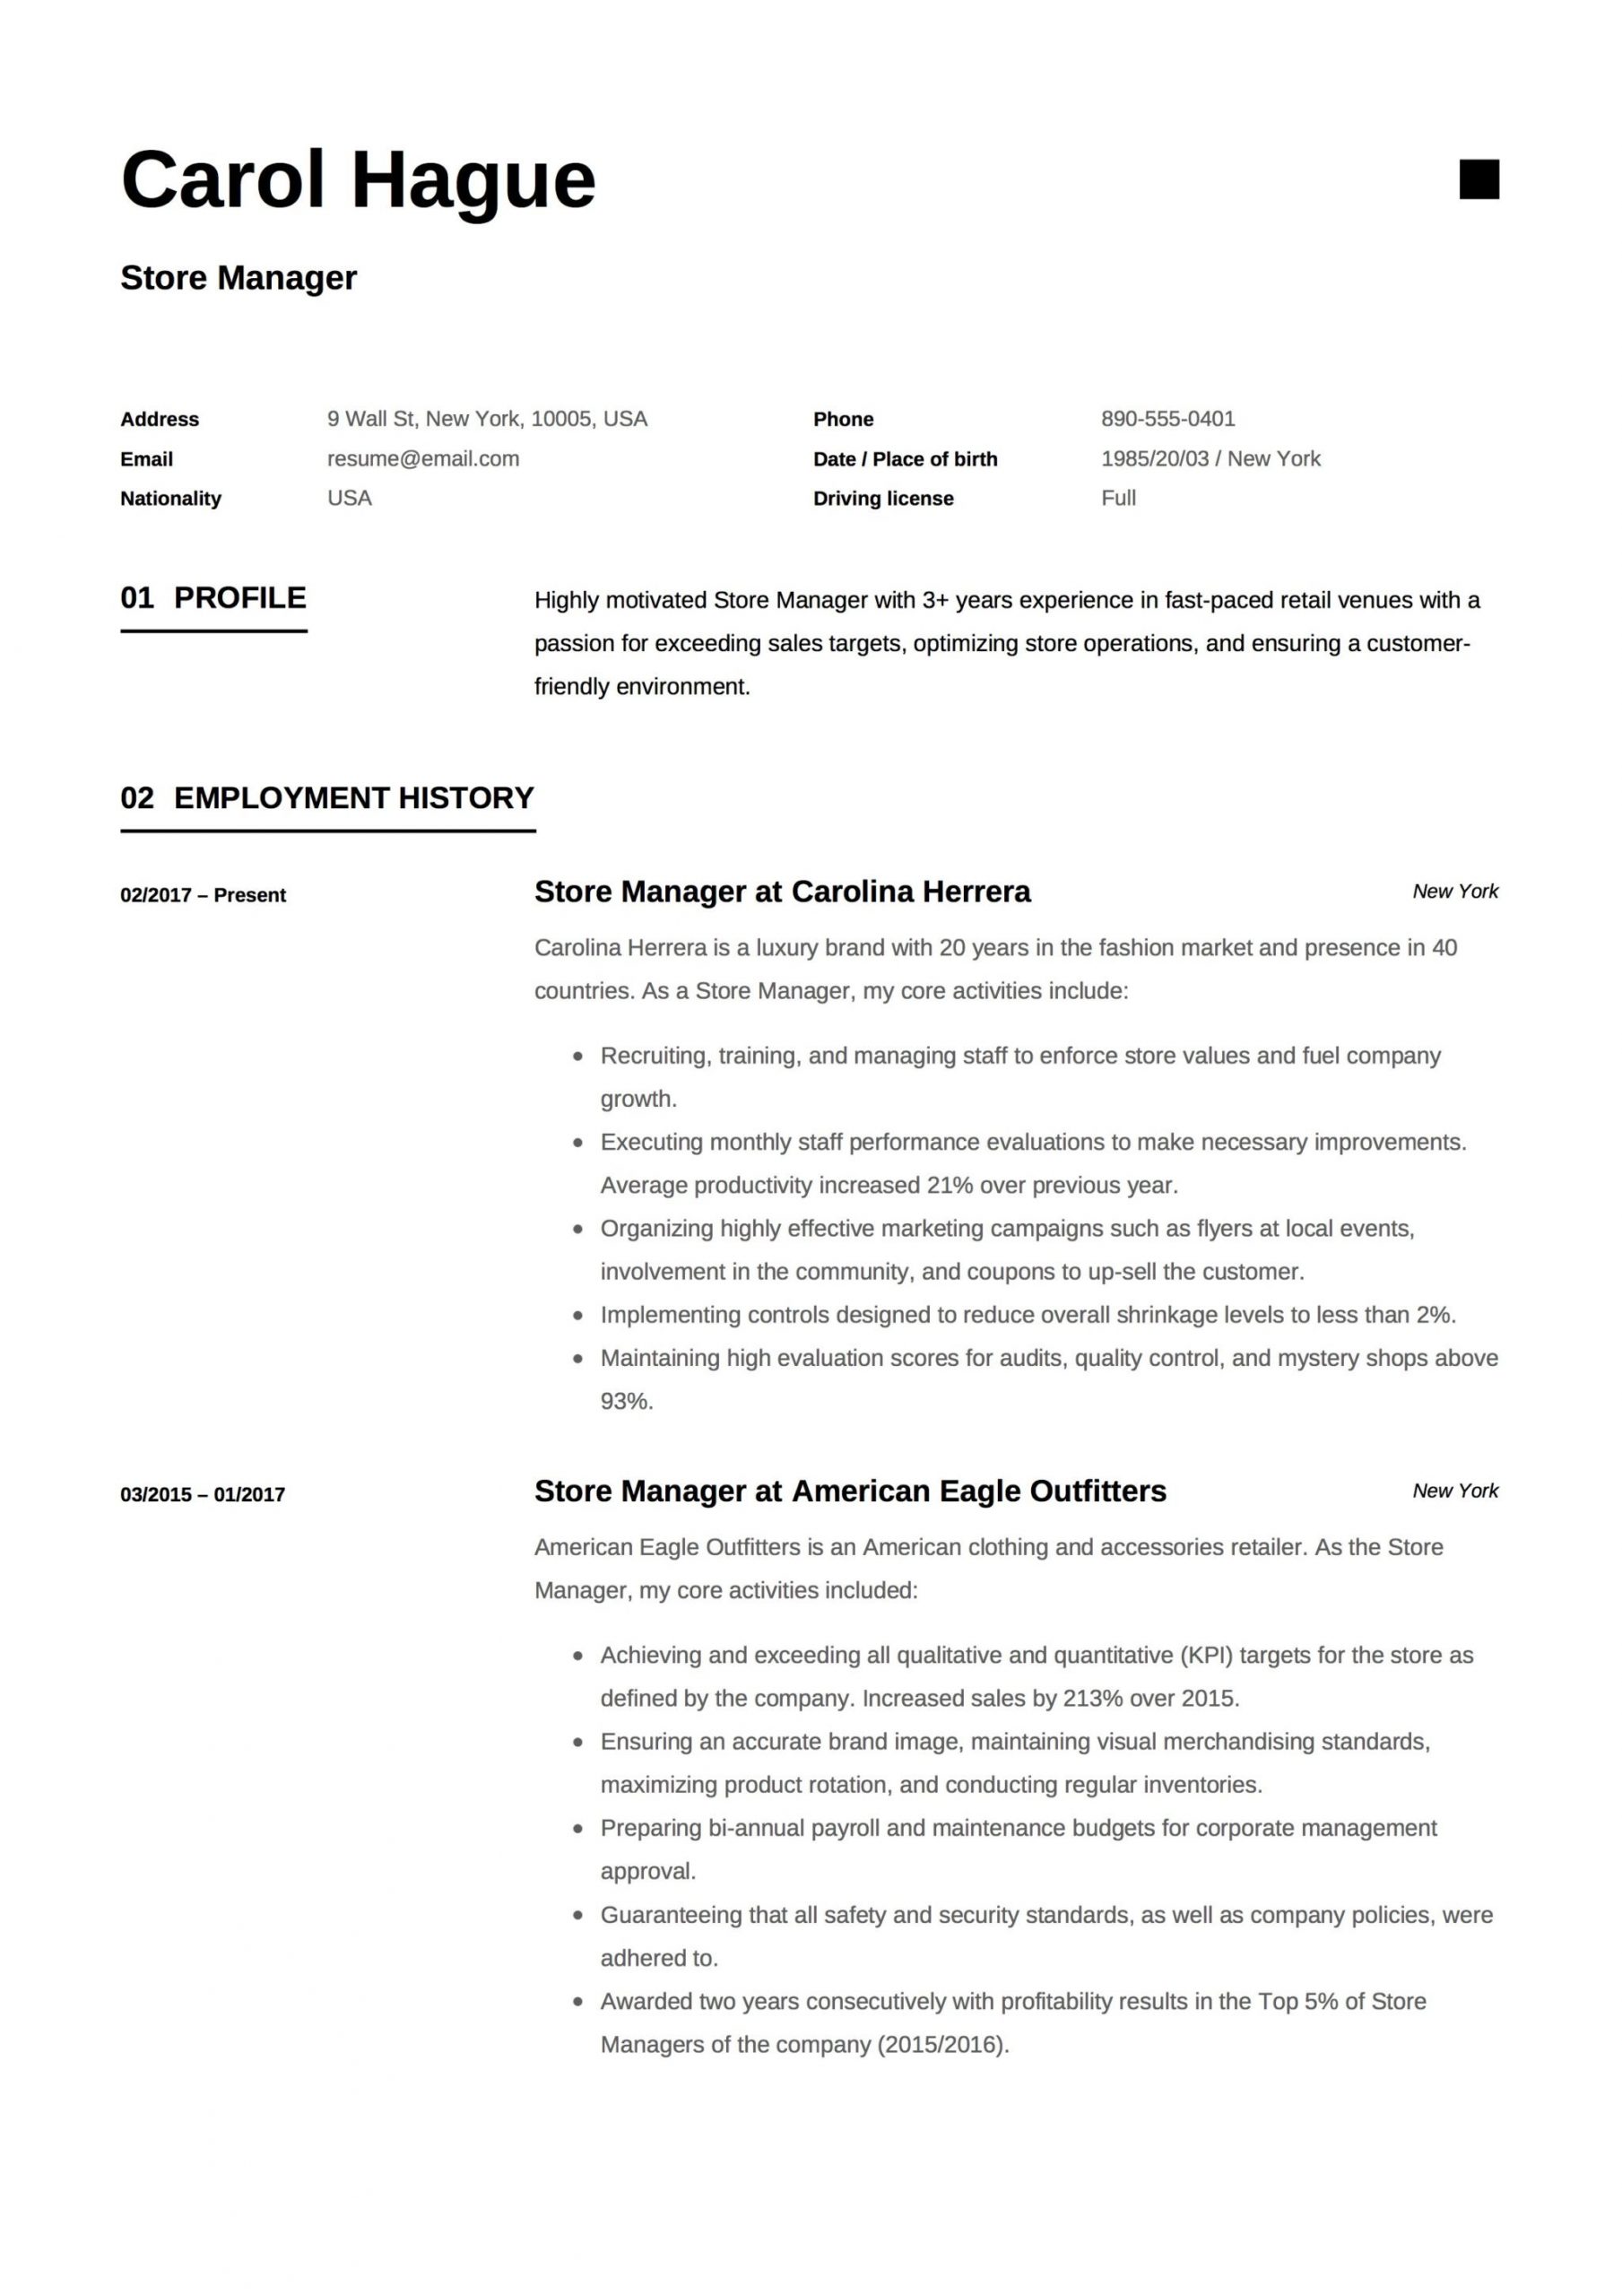 Resume Samples for Retail Store Jobs Retail Store Coordinator Sample Resume September 2021